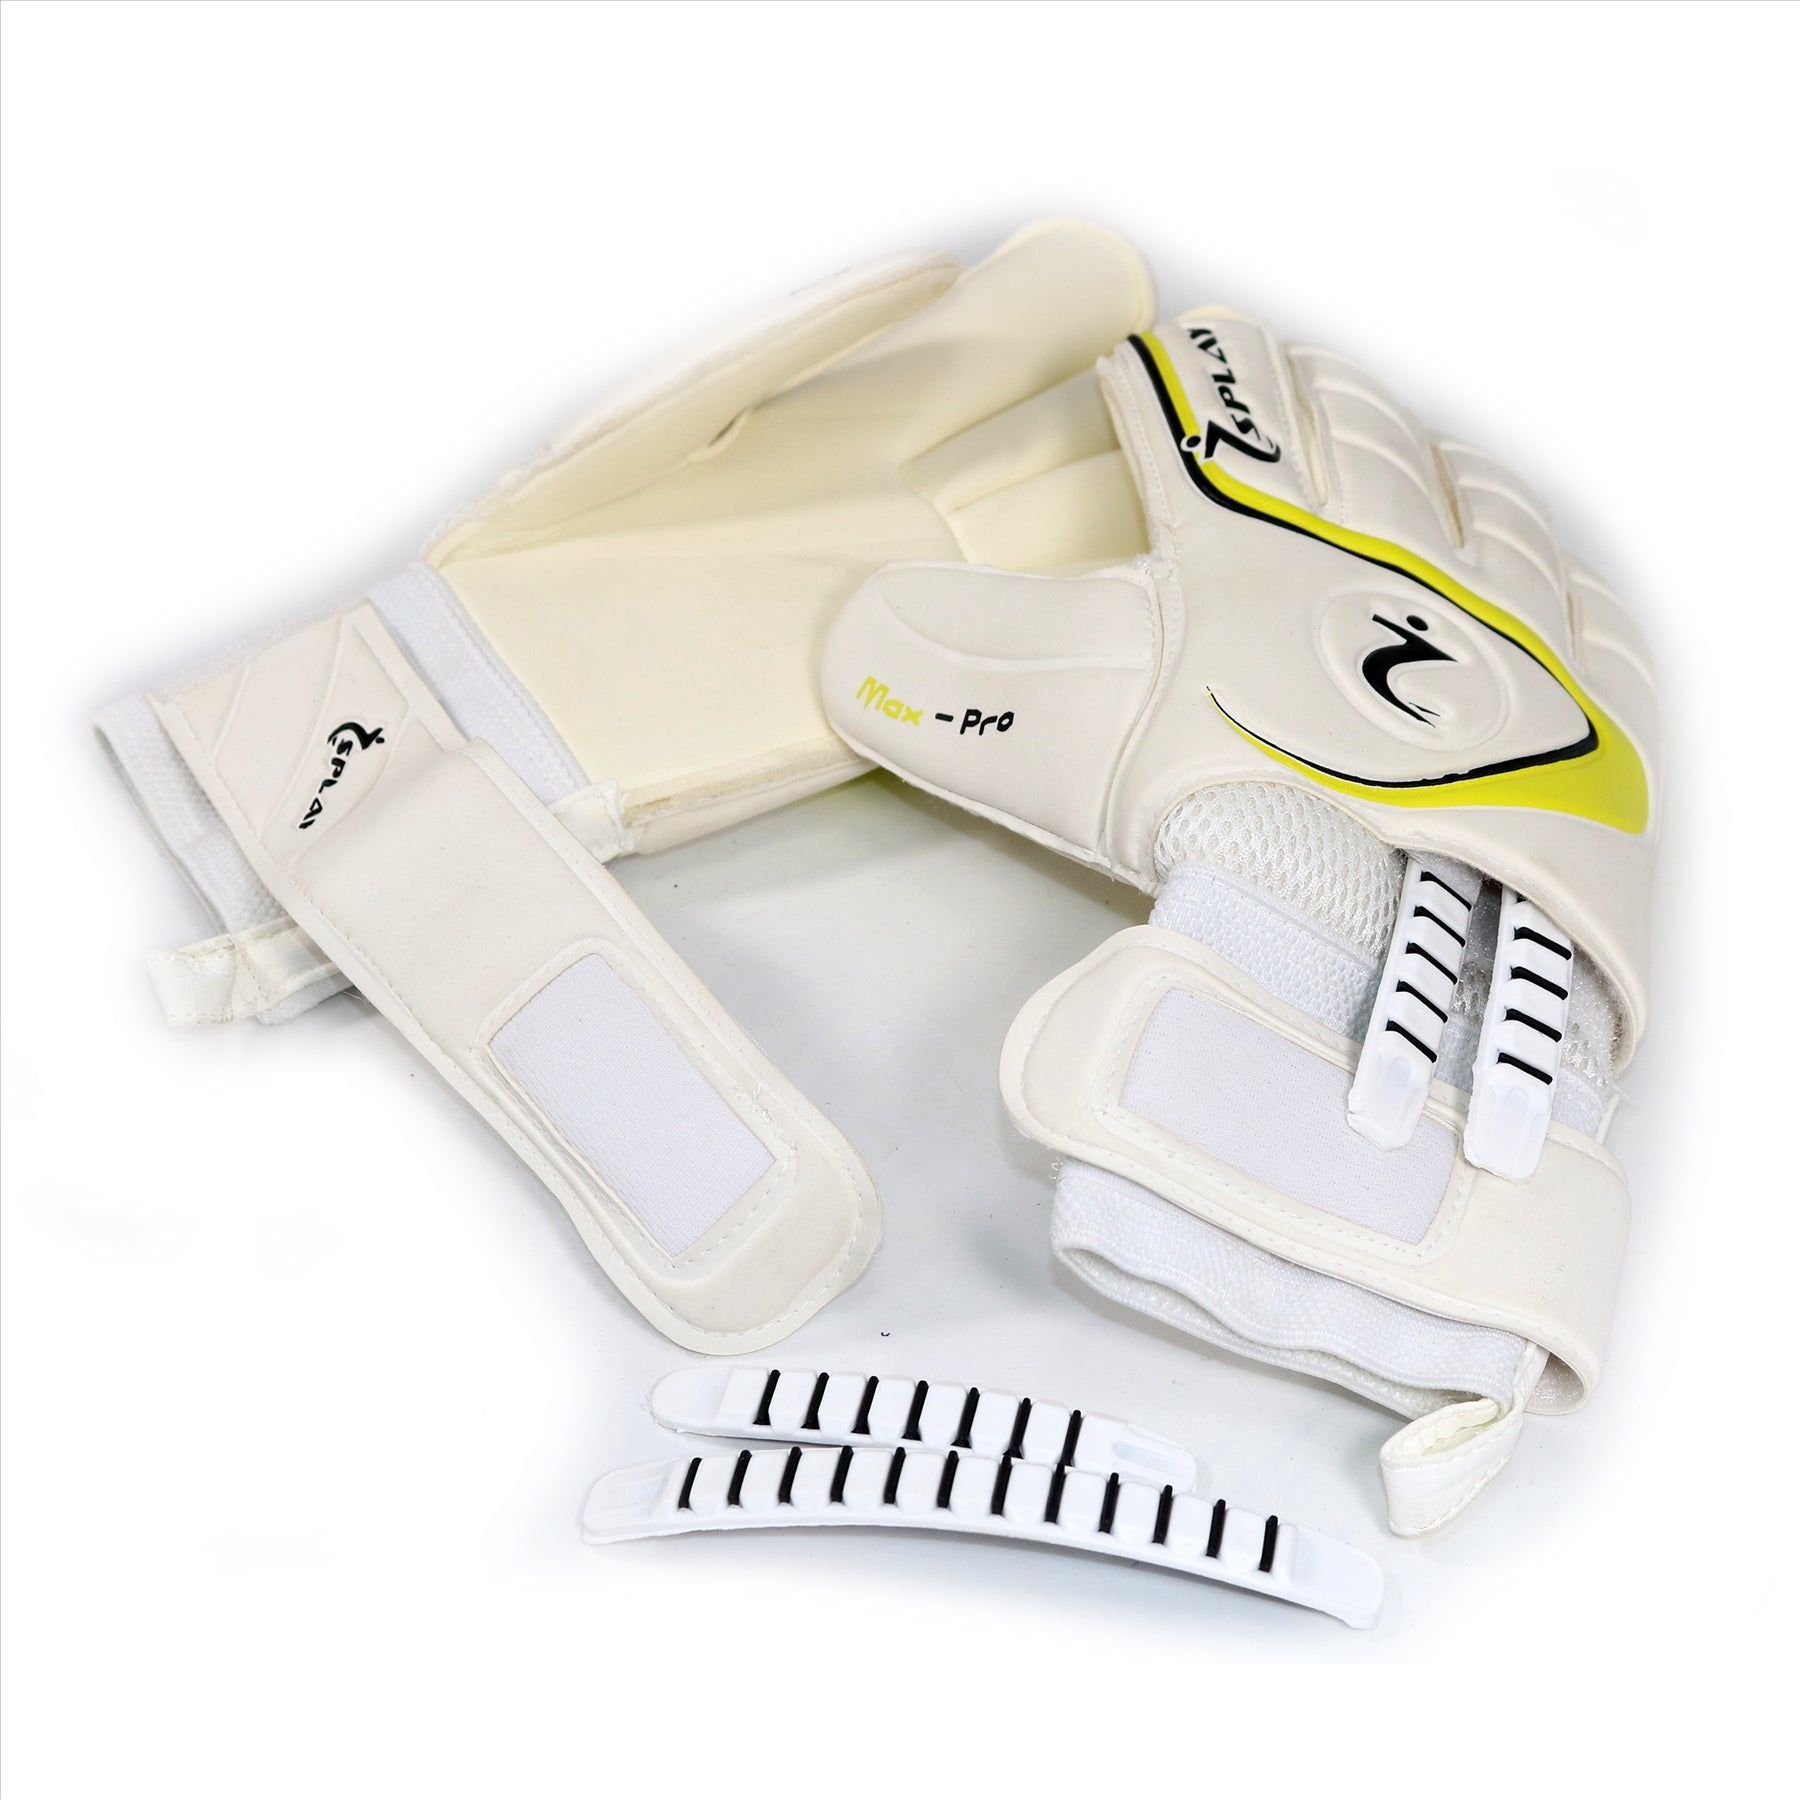 Buy Splay Fusion Football Gloves-Football Gloves-Splay-Splay UK Online